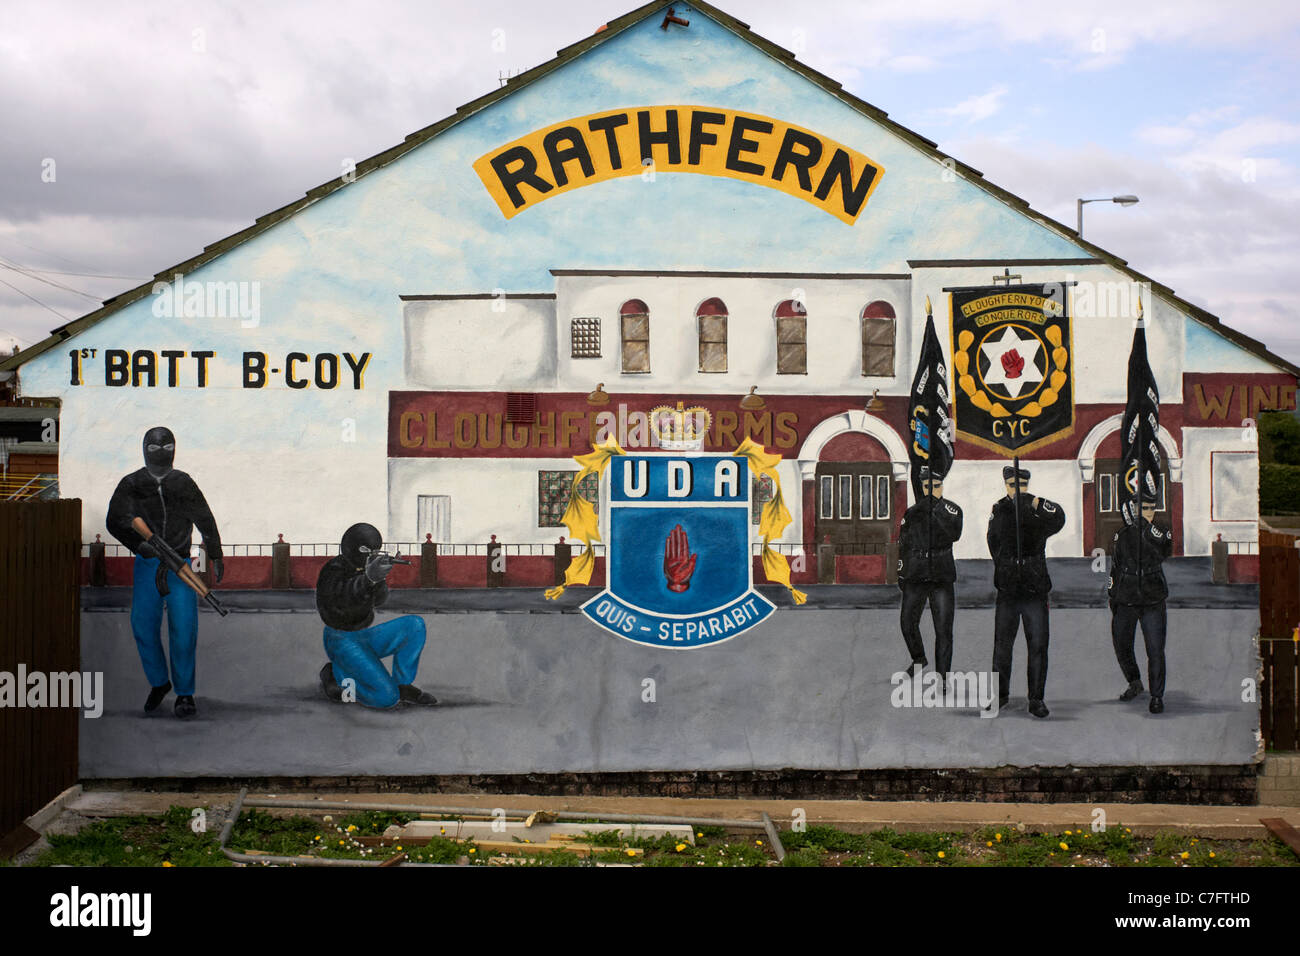 Rathfern uda Ulster Defence association parete lealisti pittura murale di newtownabbey Irlanda del Nord Foto Stock